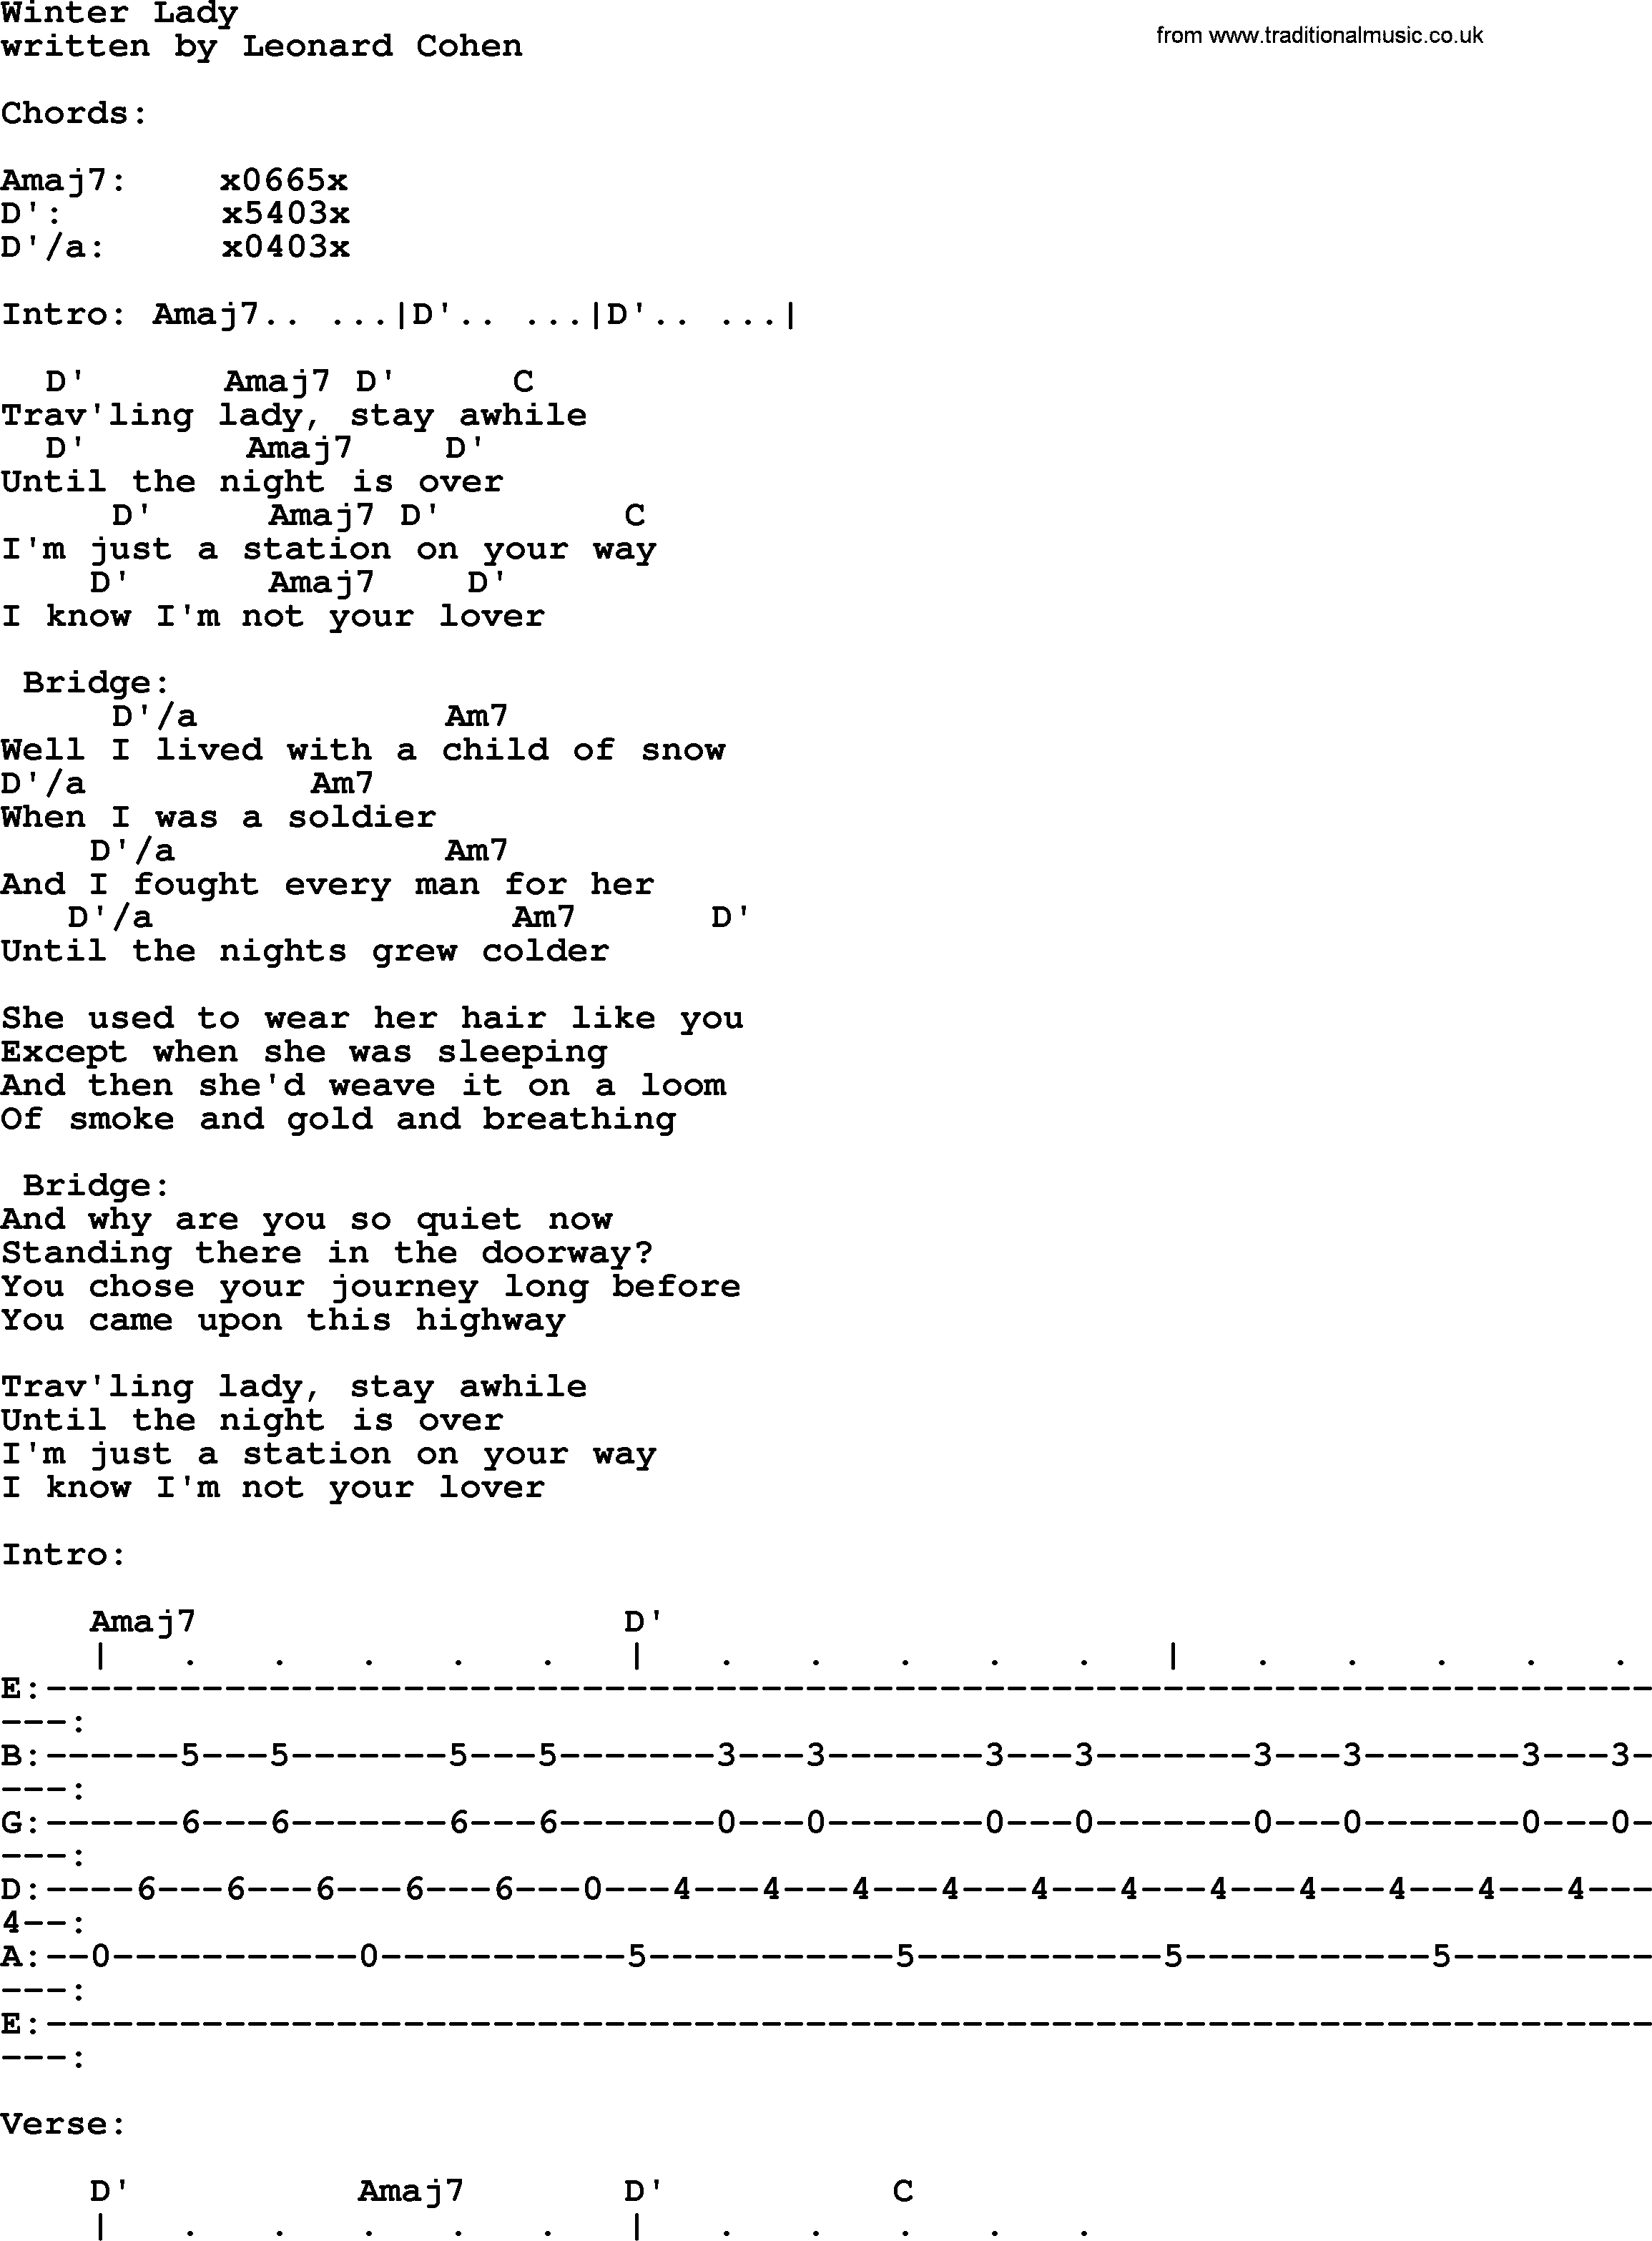 Leonard Cohen song Winter Lady, lyrics and chords